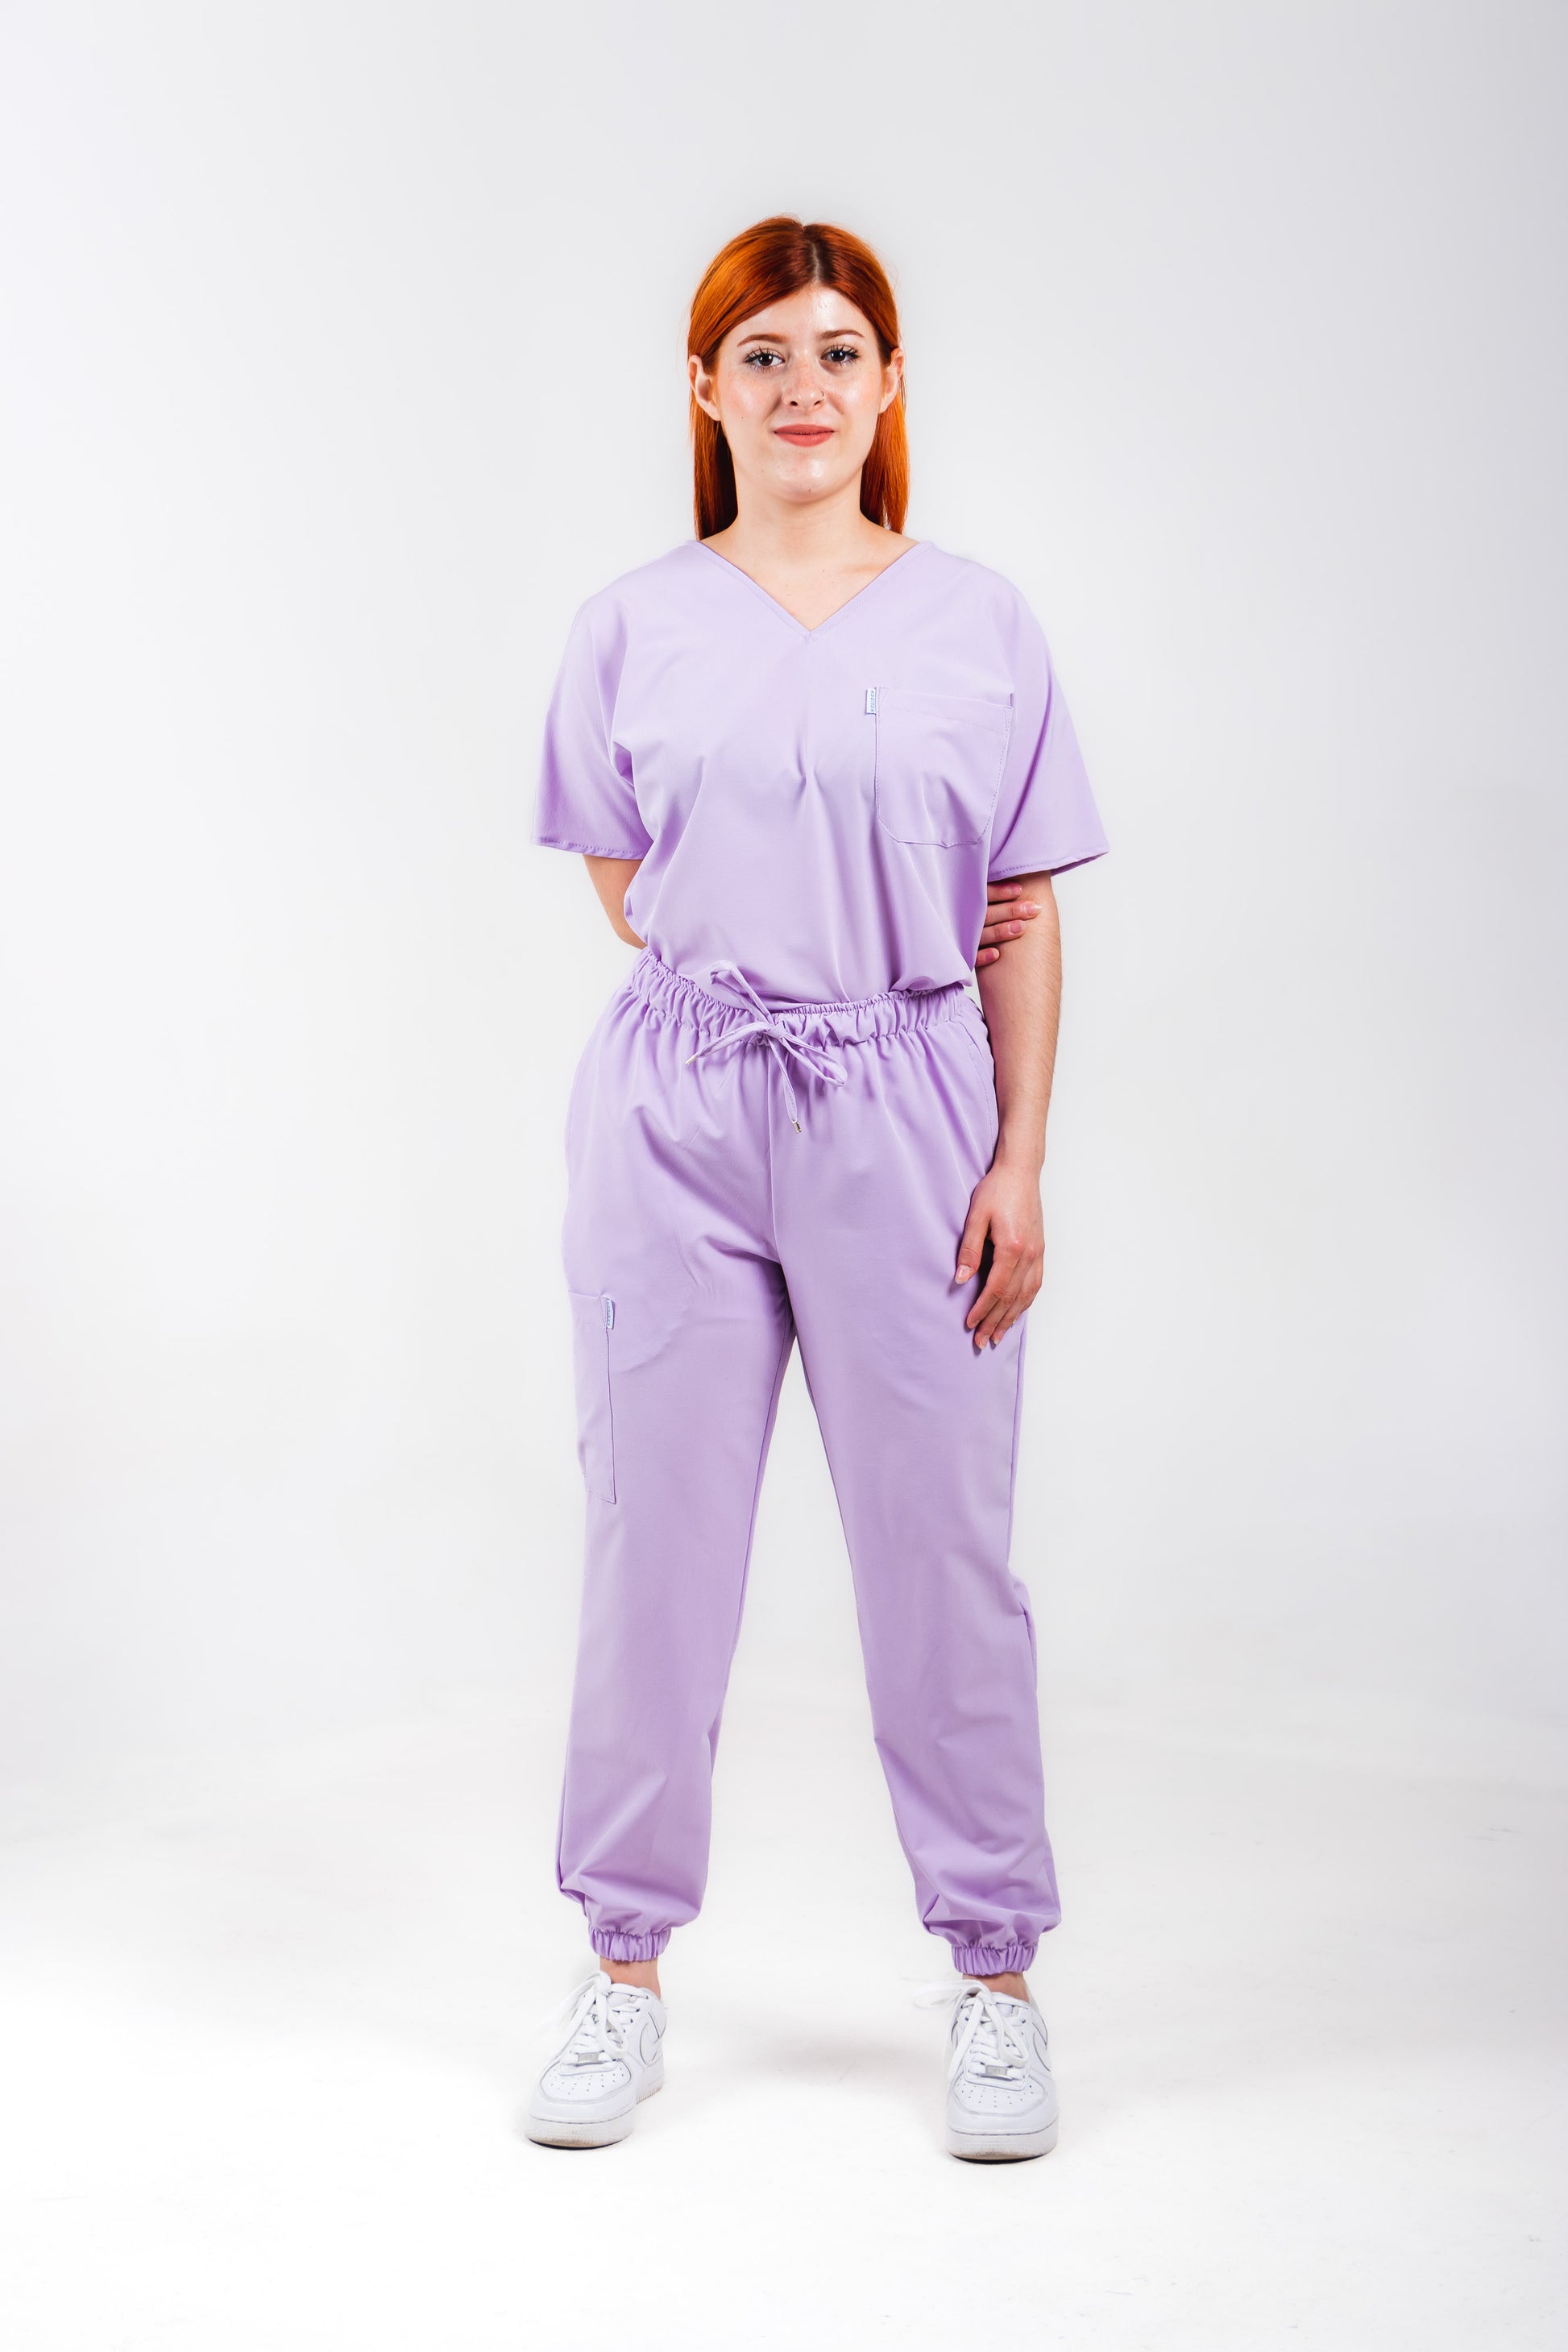 Uniforme quirúrgico para dama color lila corte jogger. modelo jener marca addisonscrubs.